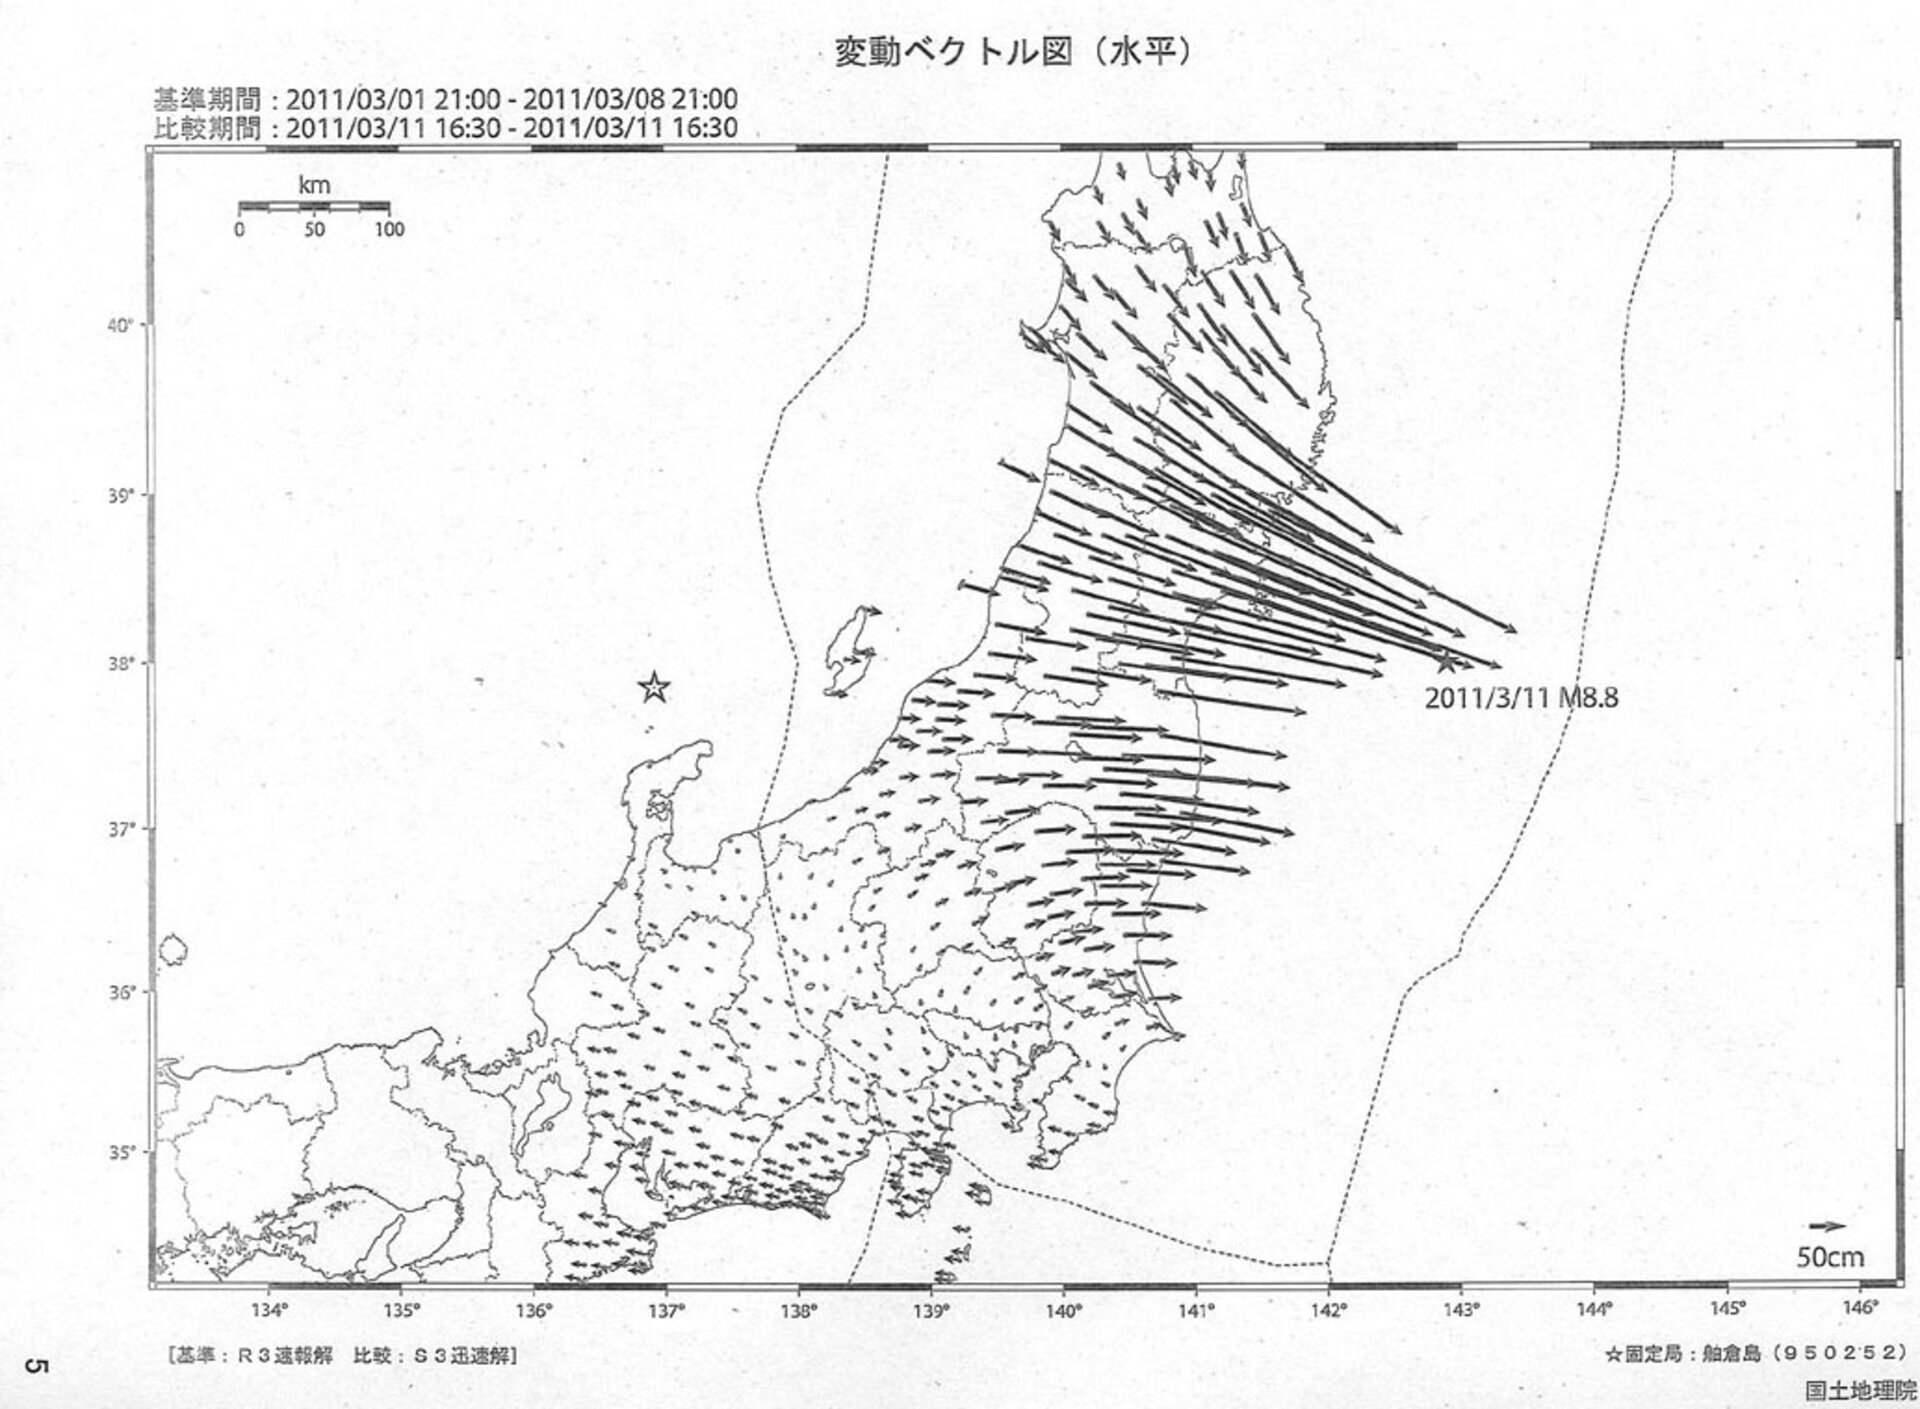 GPS coseismic measurement of Sendai earthquake